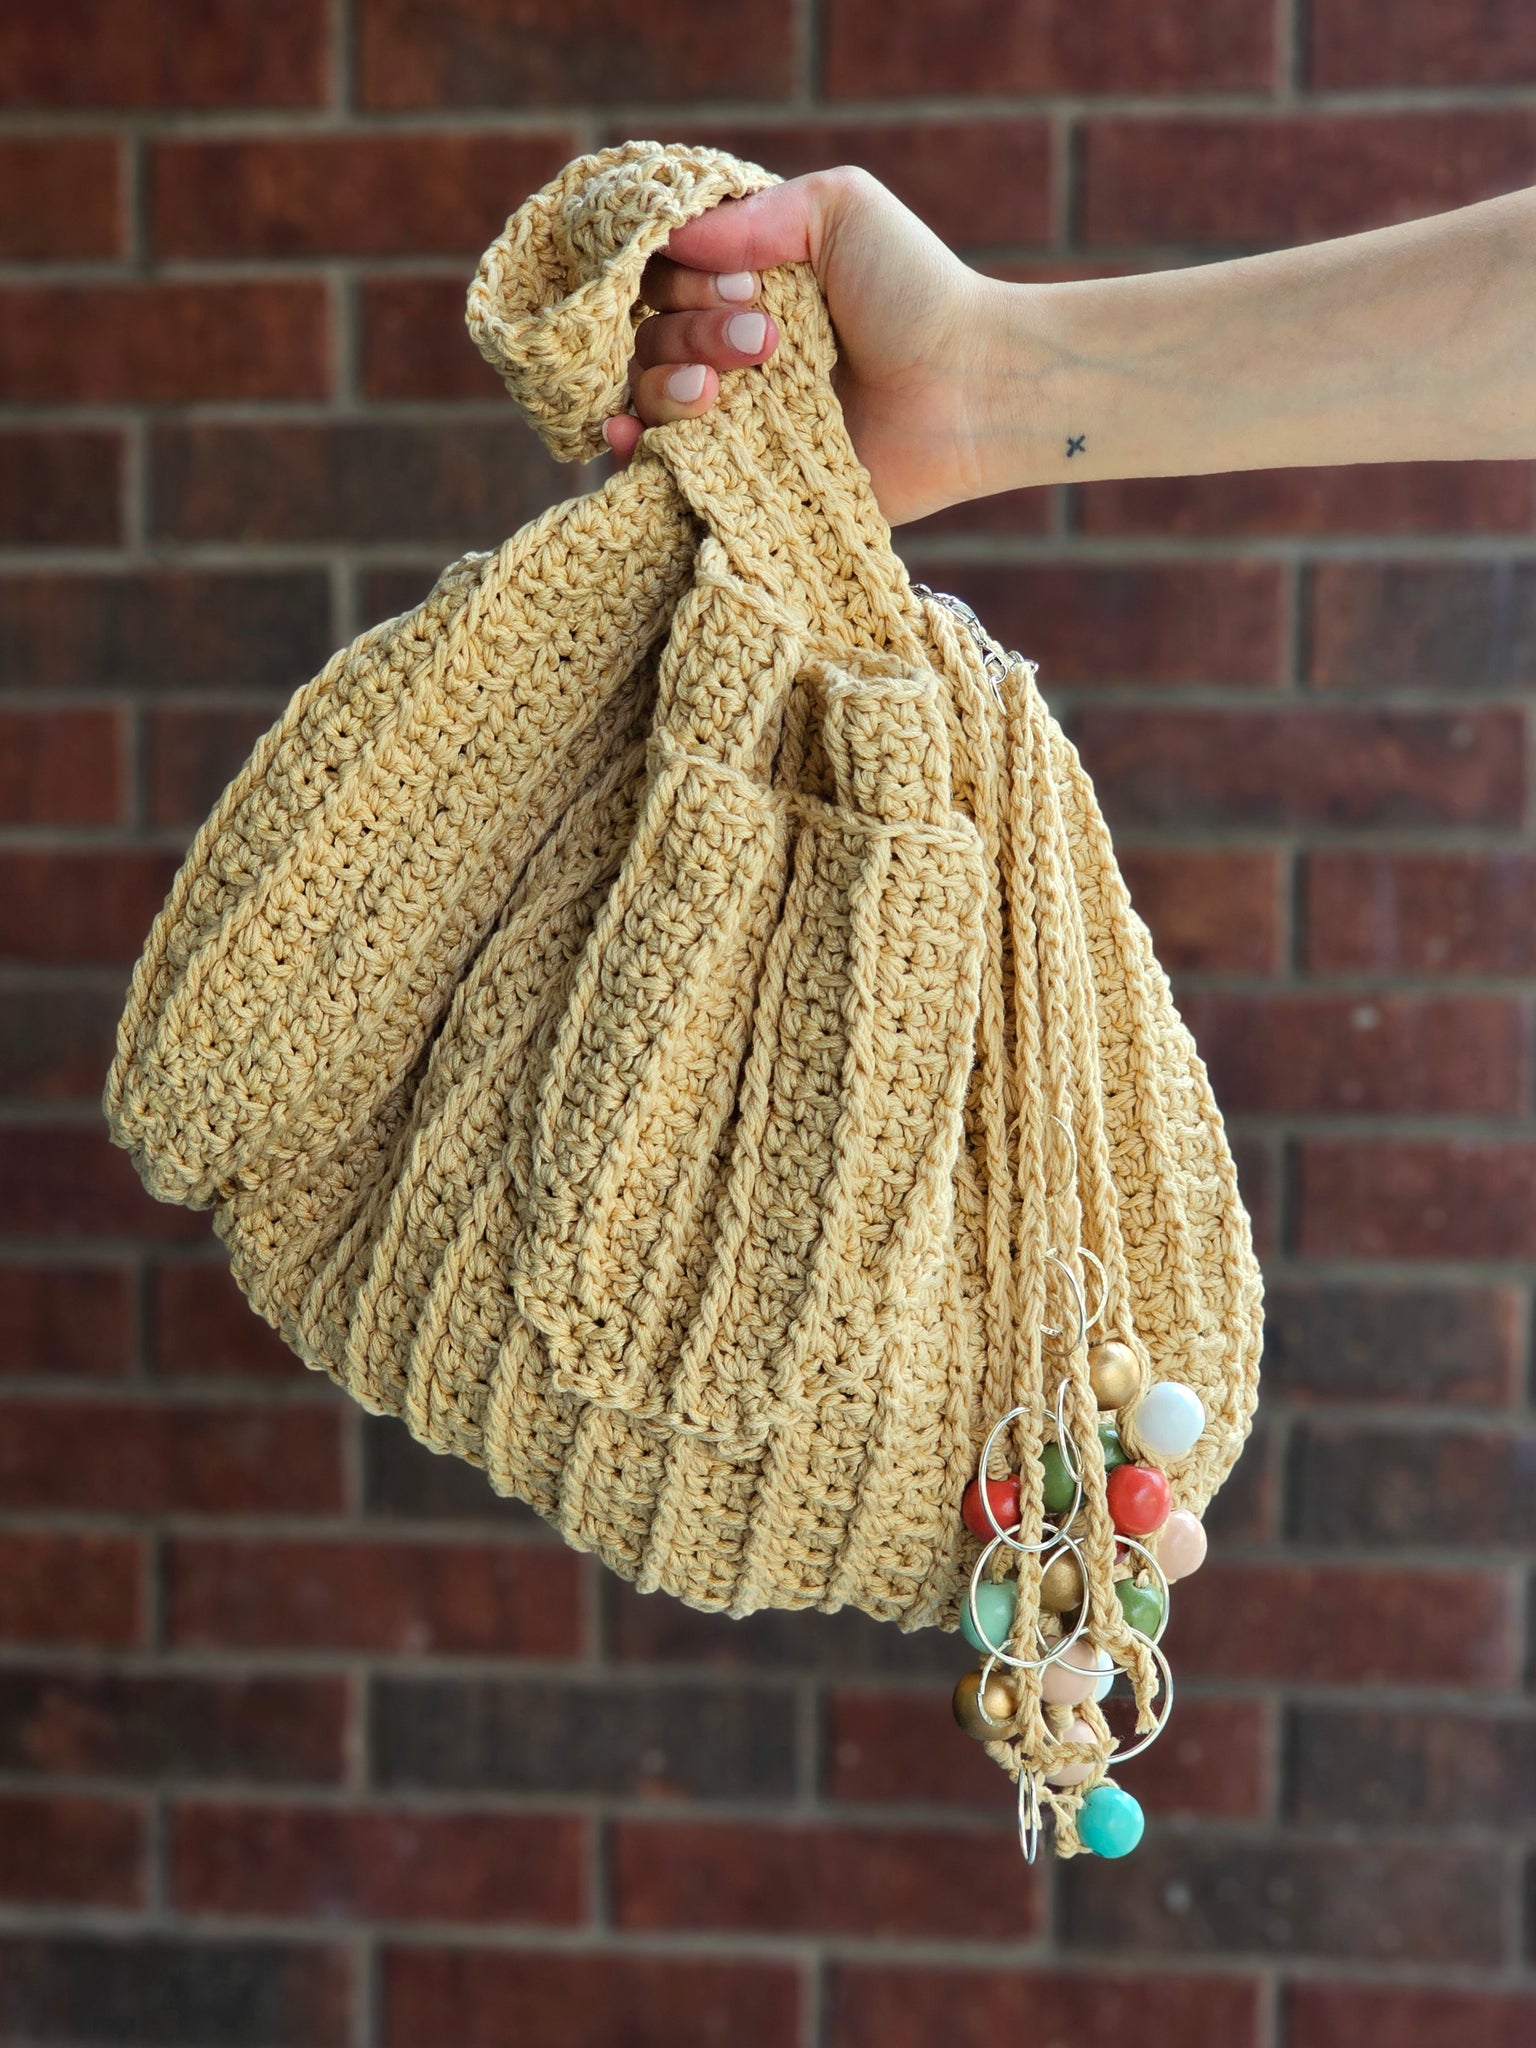 Free Spirit Boho Bag Crochet PDF Pattern by Crystal Bucholz